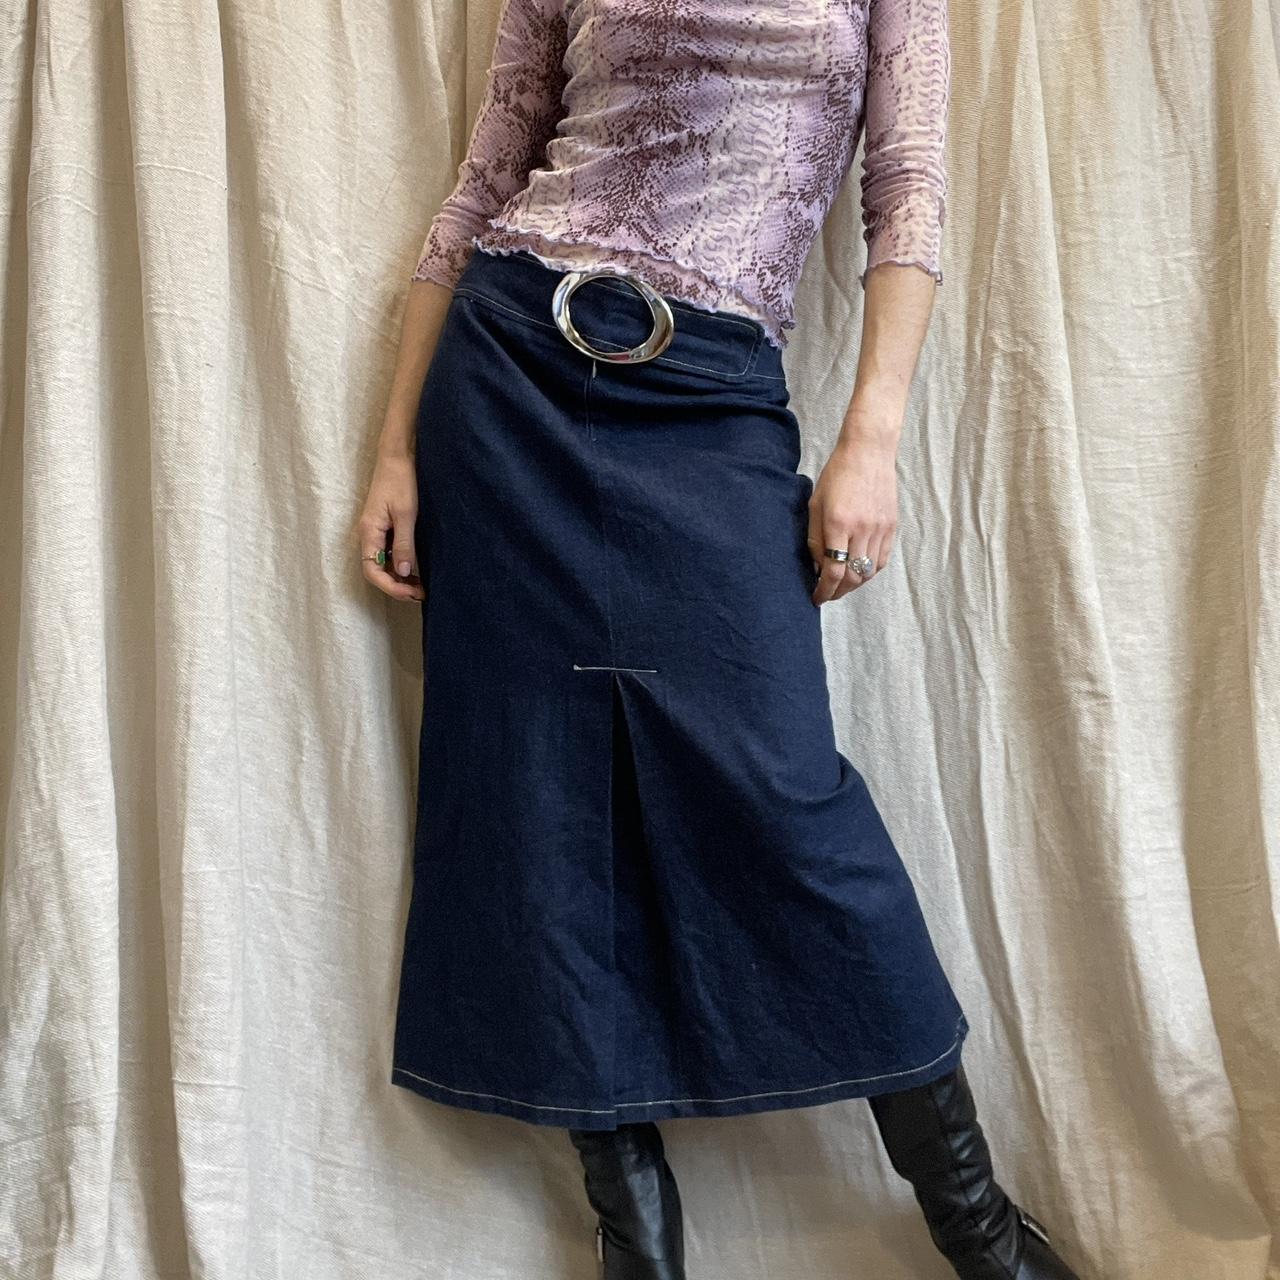 Denim longline skirt with big silver buckle belt.... - Depop